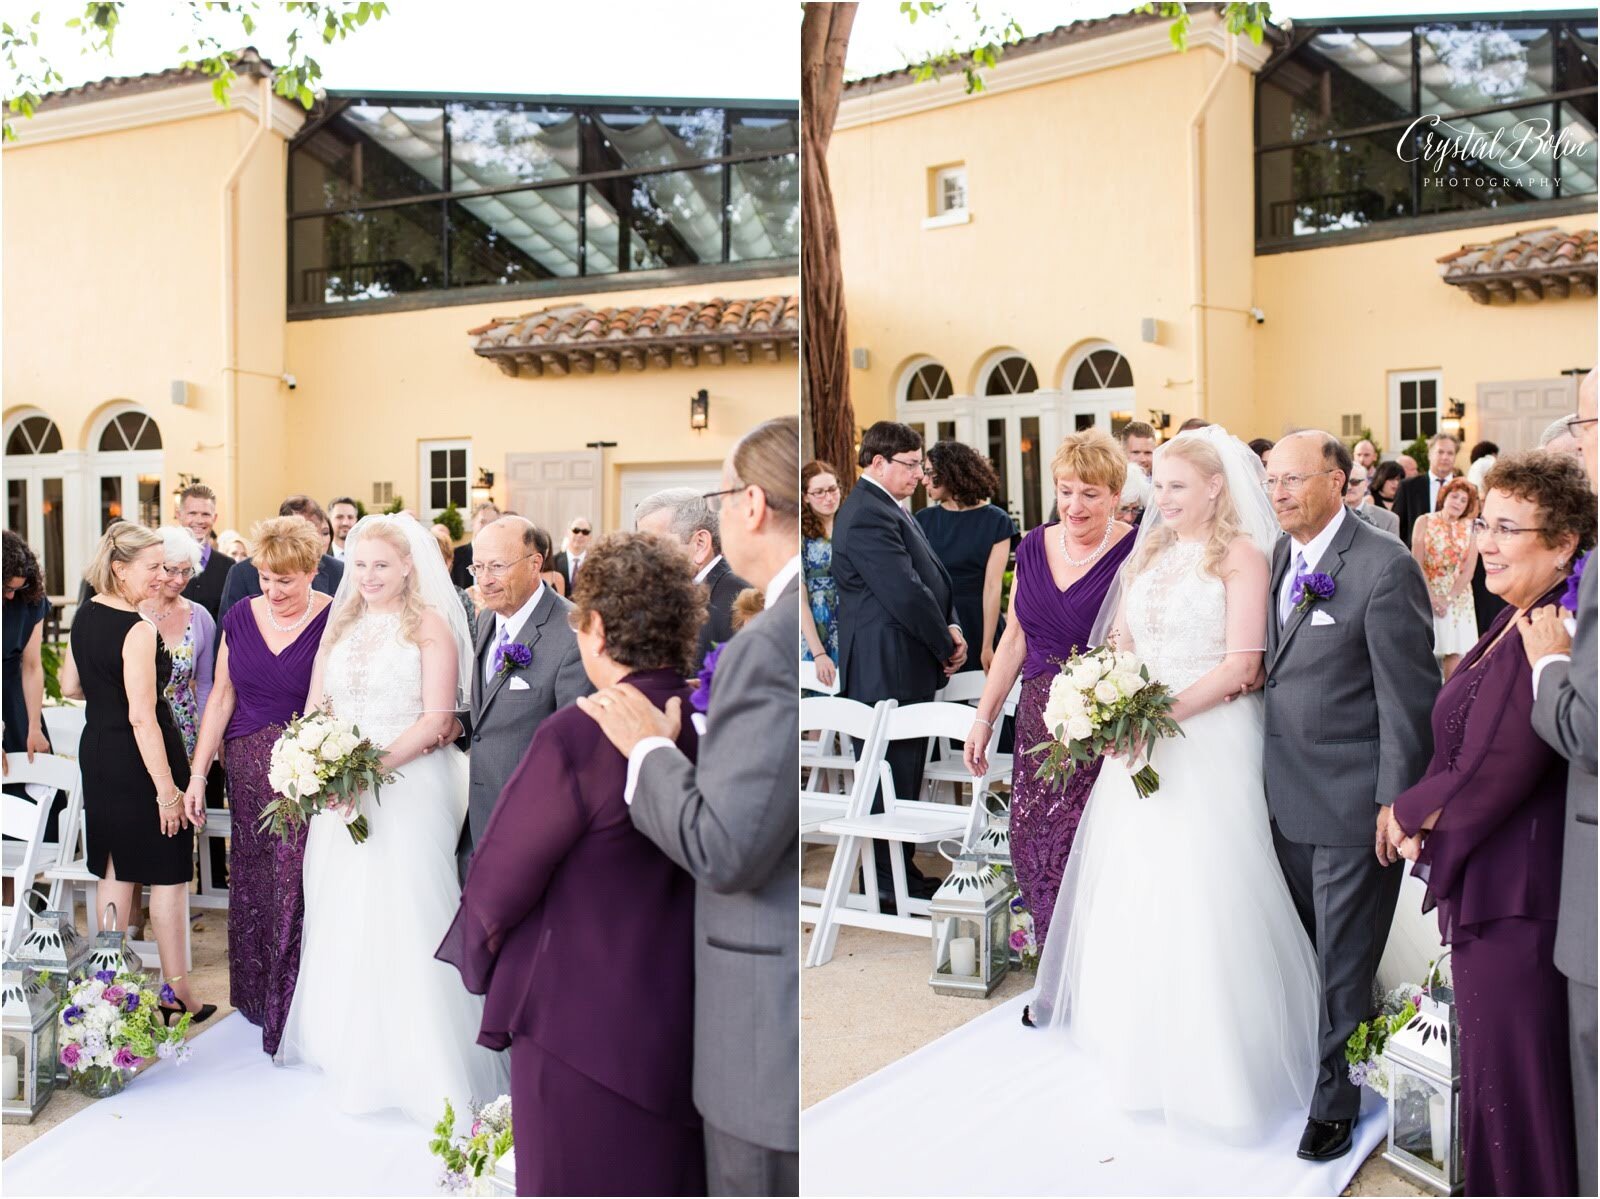 Alana & Dave's Wedding | The Addison in Boca Raton, Florida 